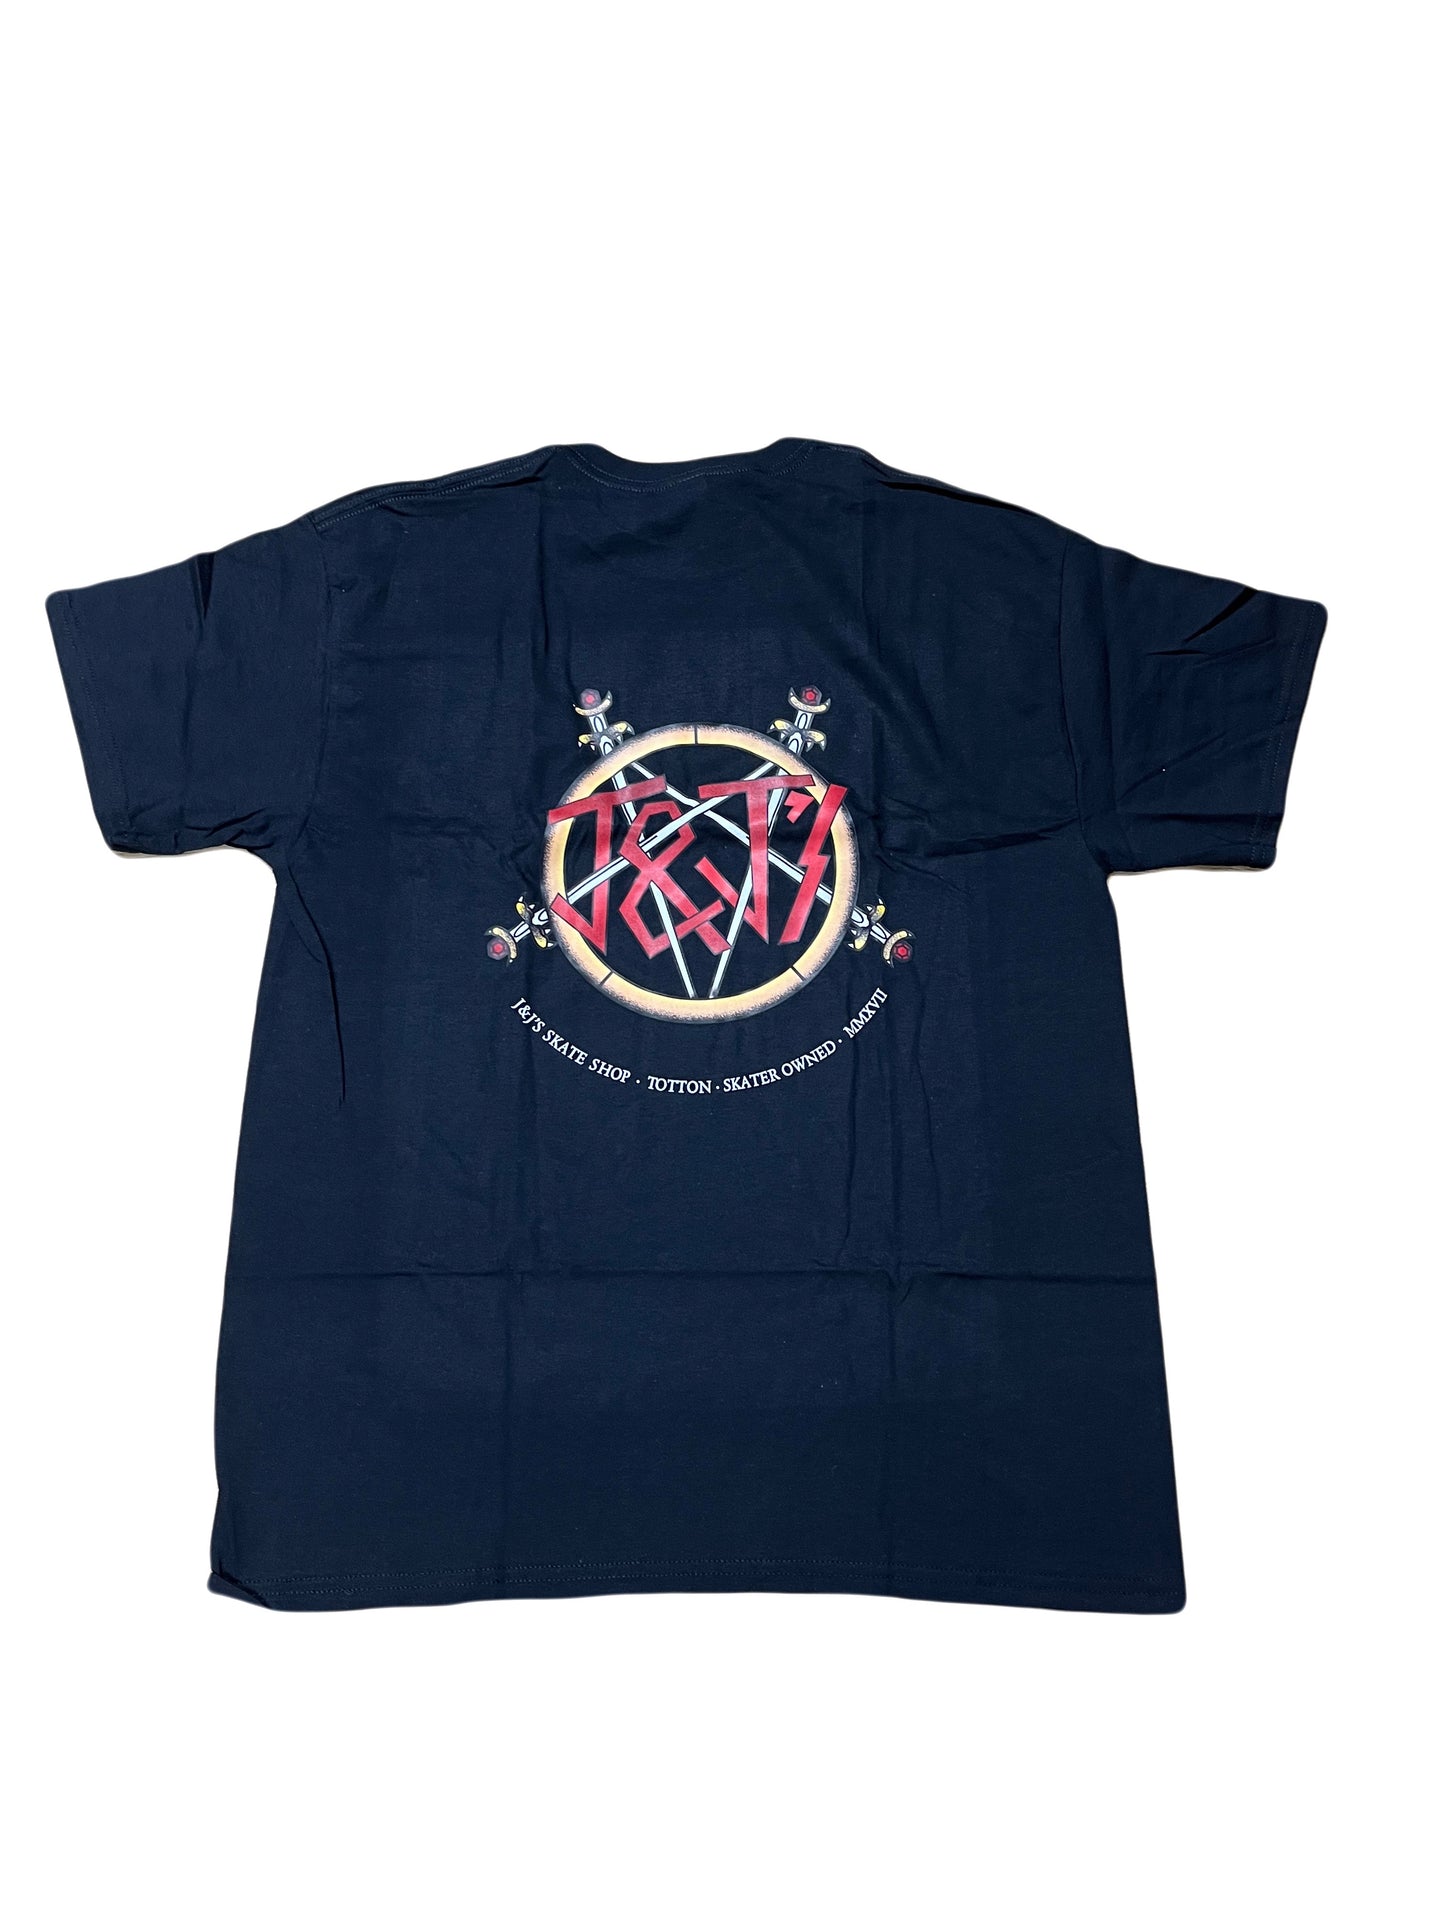 J and J's shop t-shirt Slayer logo